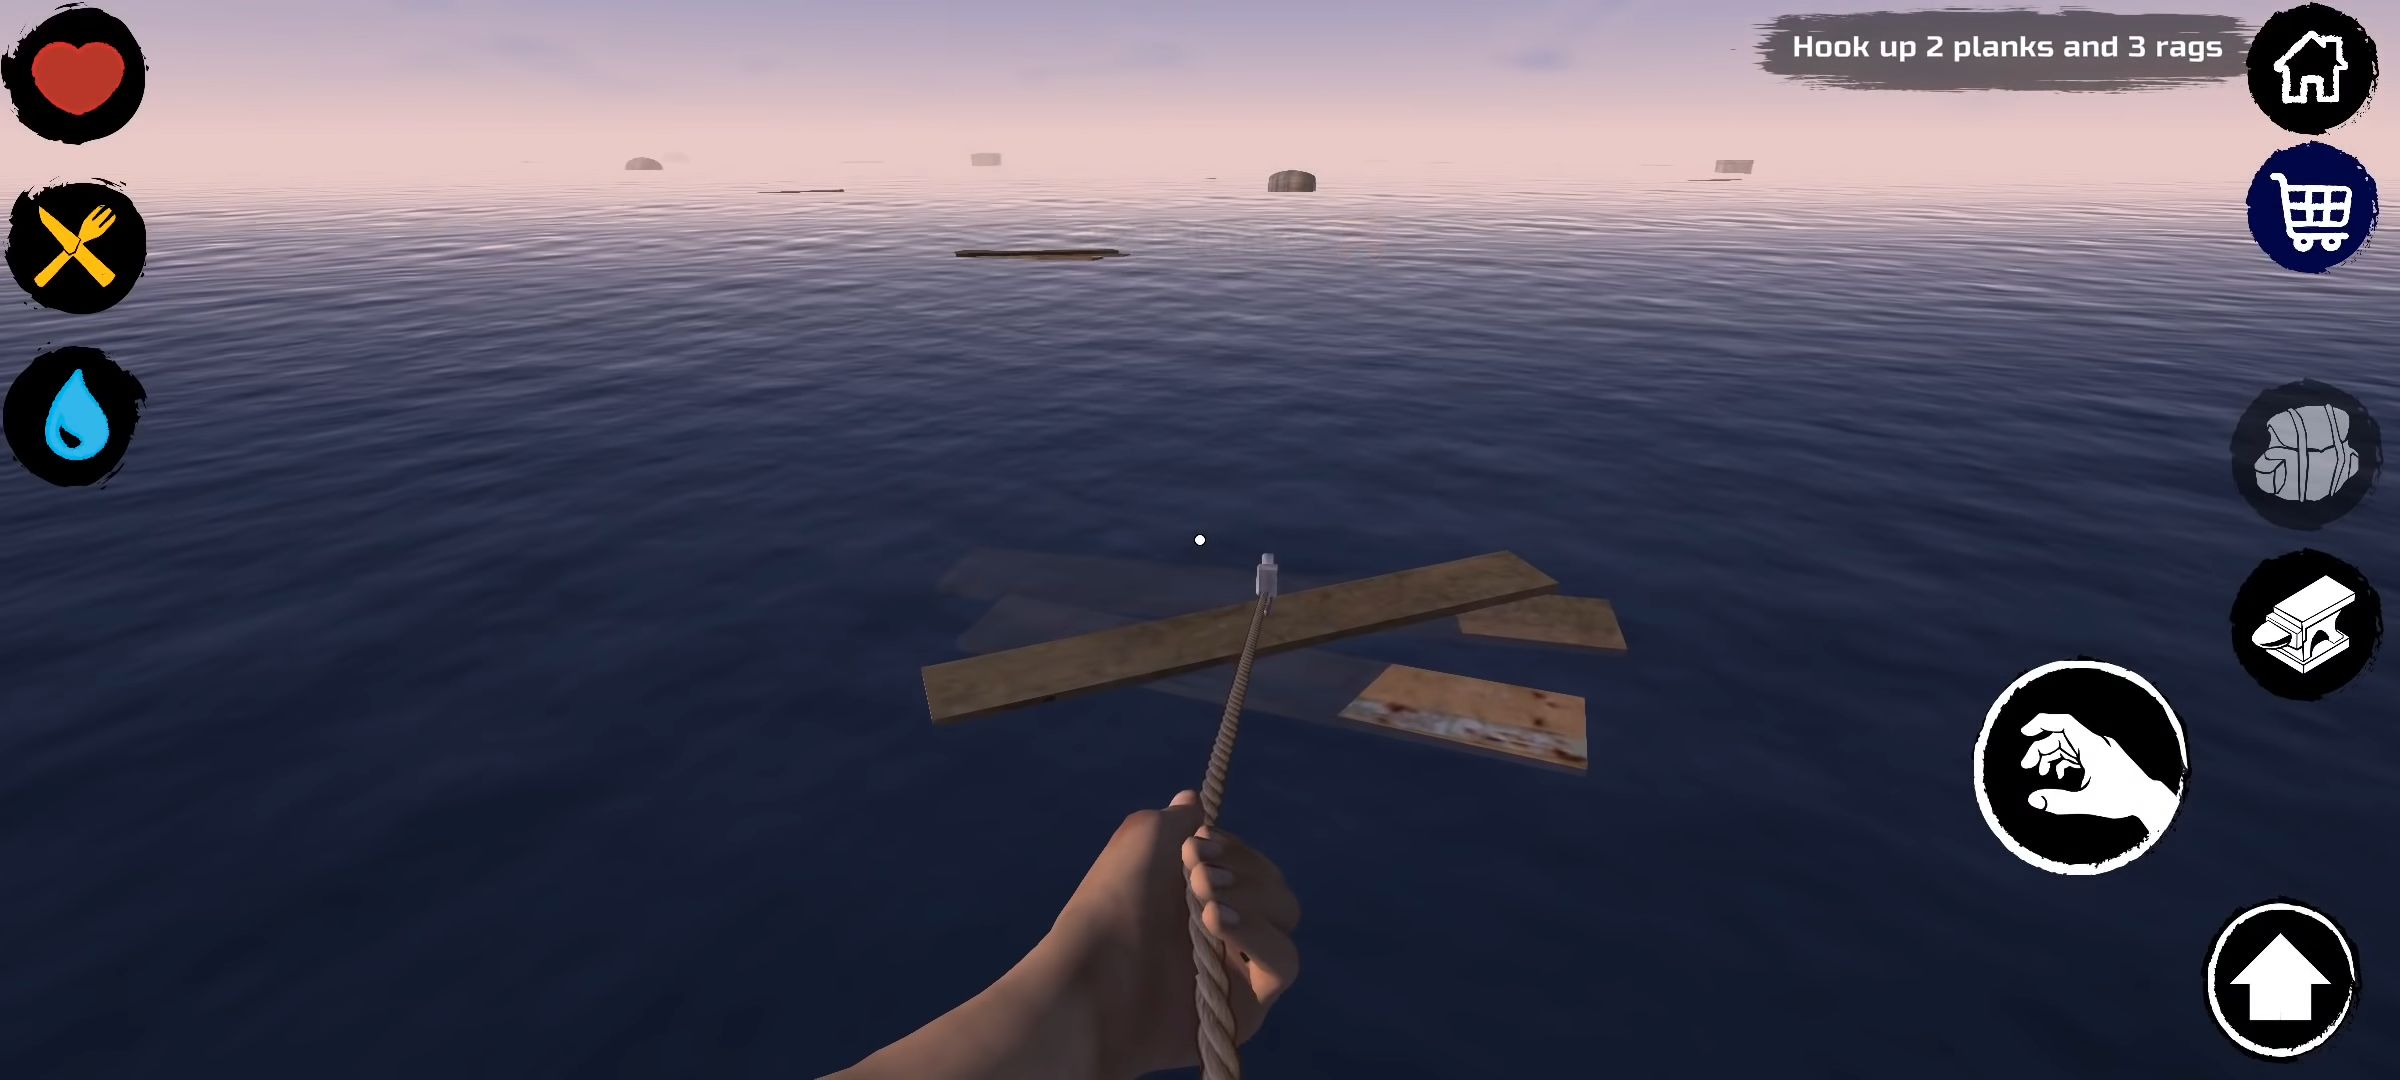 Скачать Survival and Craft: Crafting In The Ocean: Android Корабли игра на телефон и планшет.